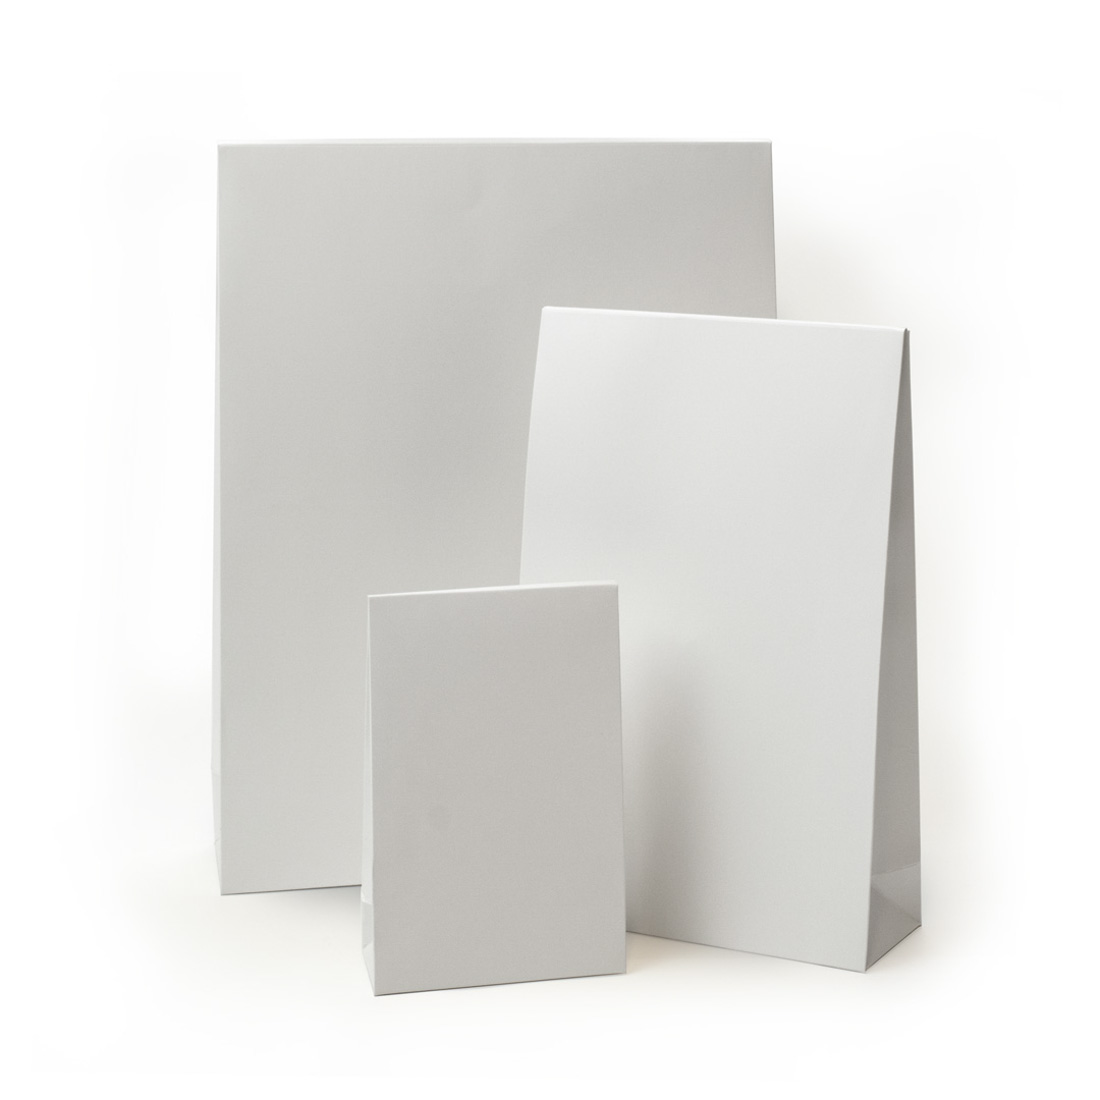 actie Gewoon In hoeveelheid Cadeauzak mat wit, met zelfklevende sluiting. FSC® | Scanlux Packaging